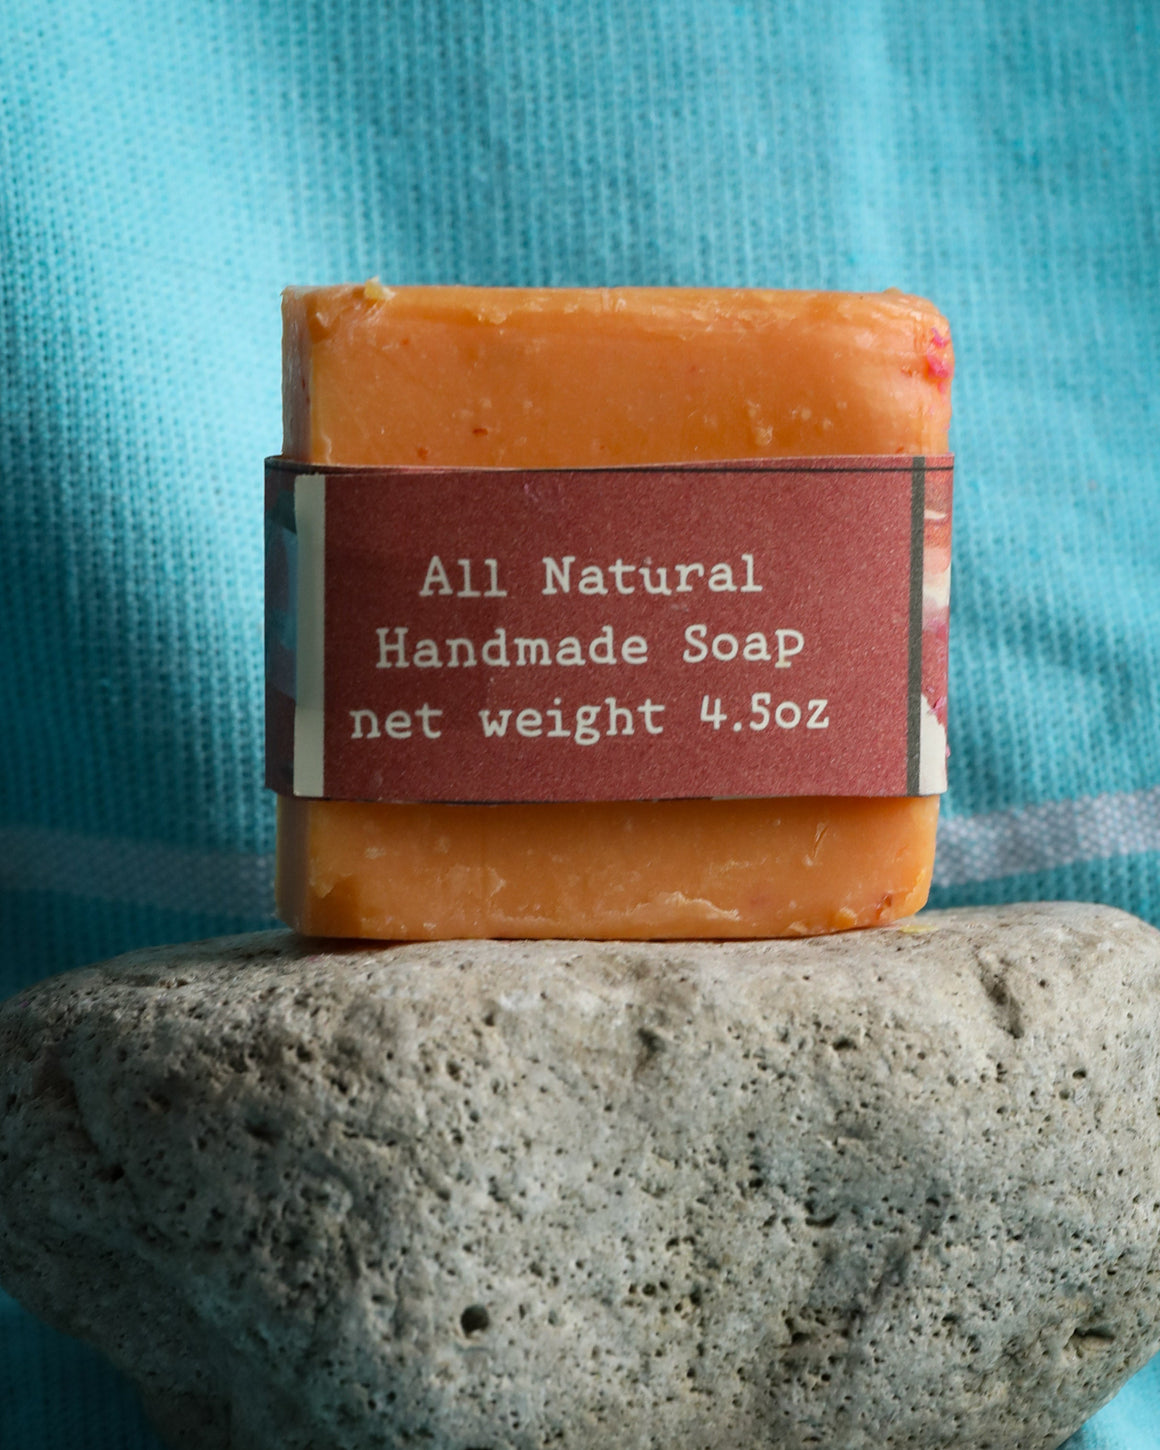 All Natural Handmade Soap / 4.5 oz